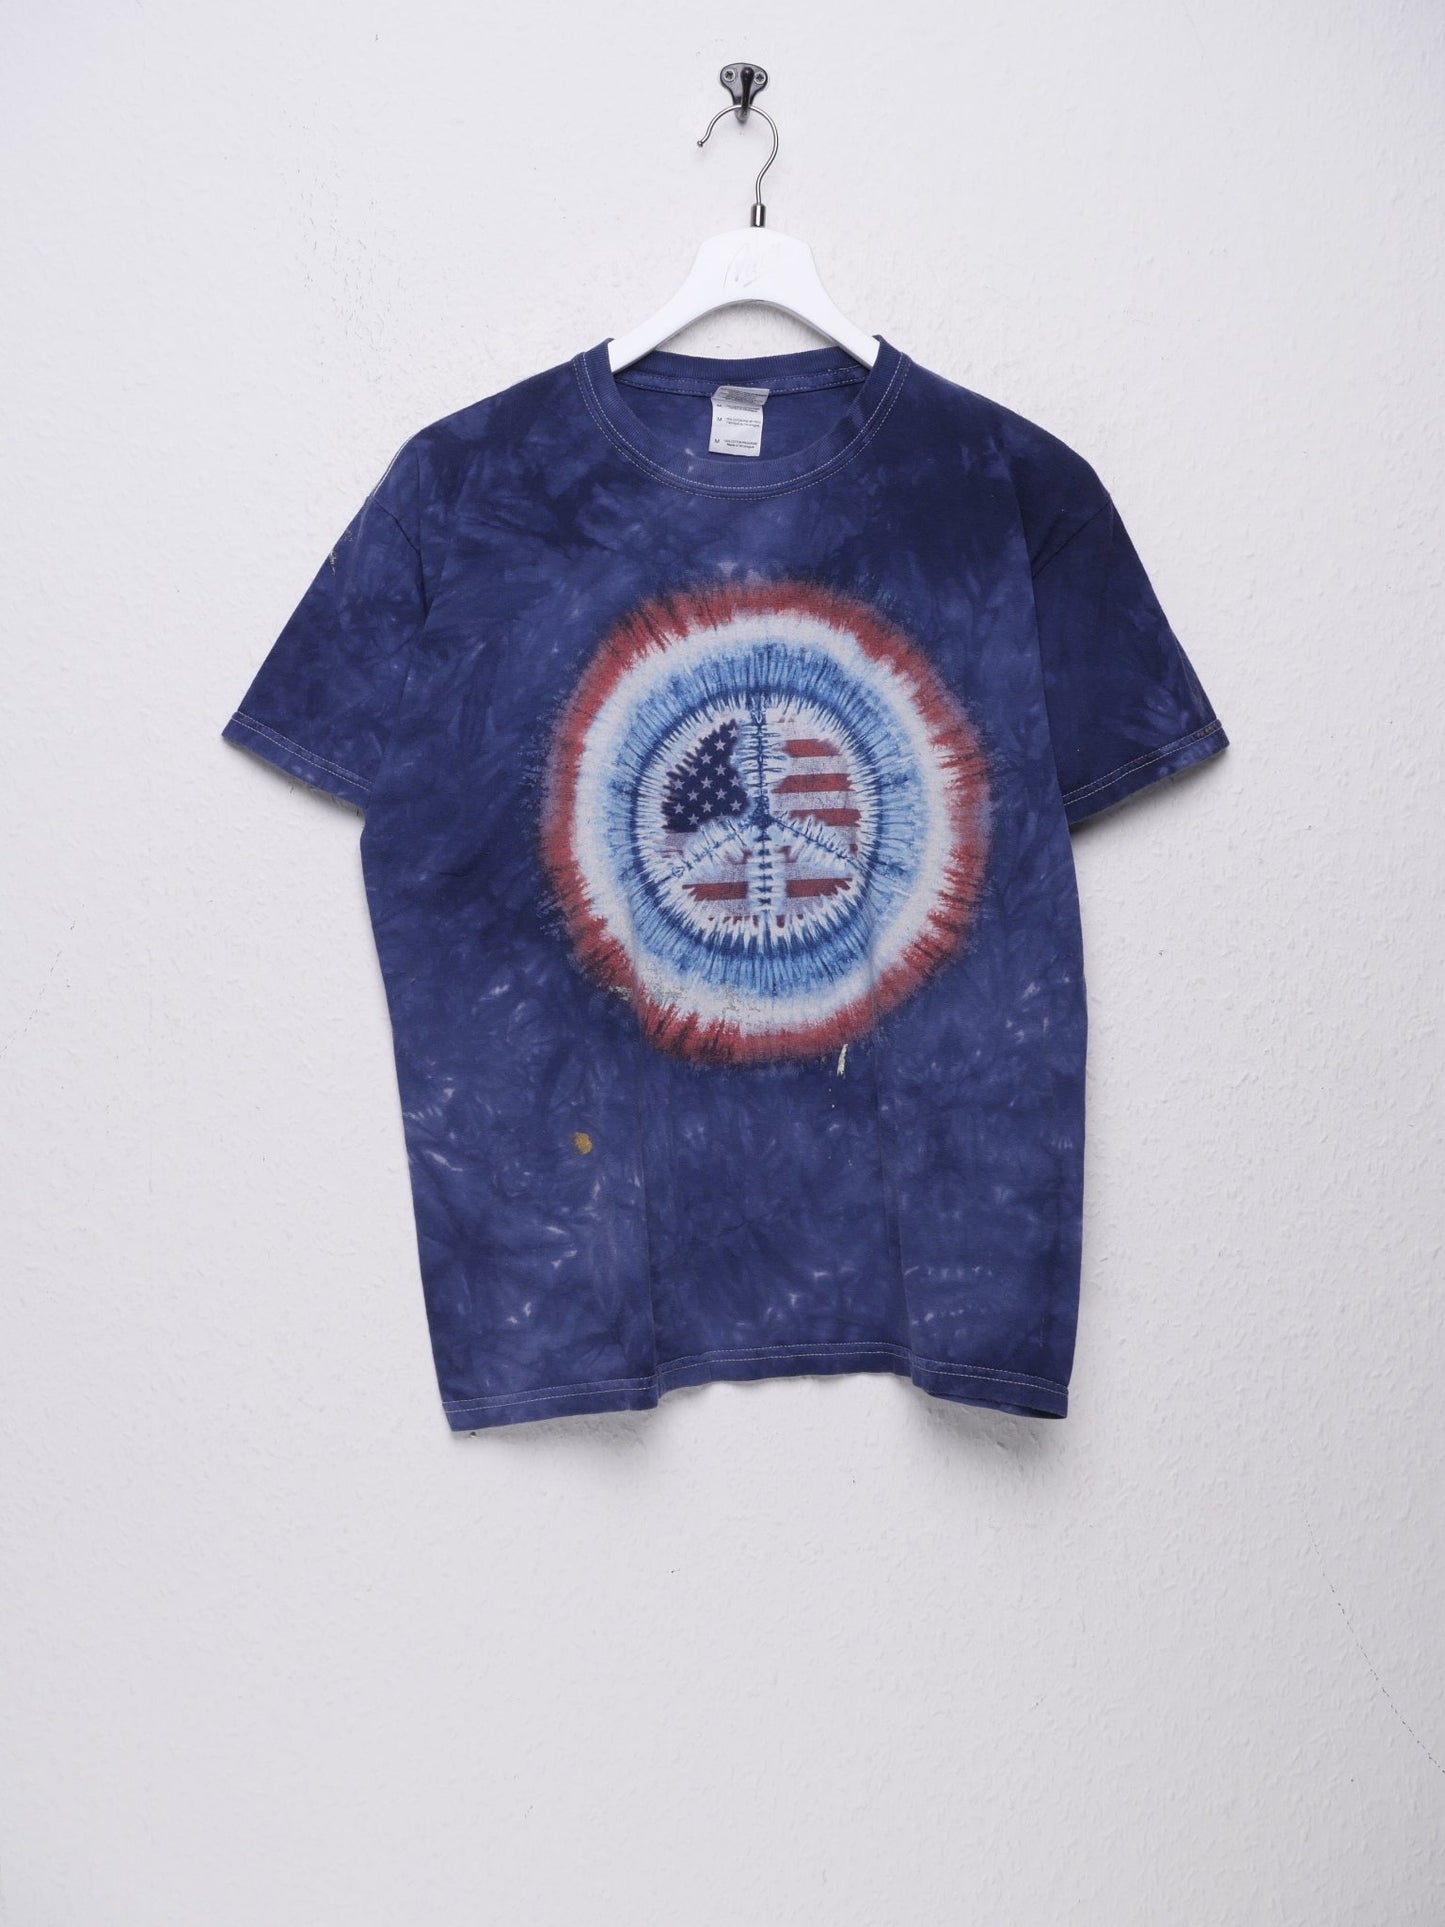 Peace America printed Tie Dye Shirt - Peeces